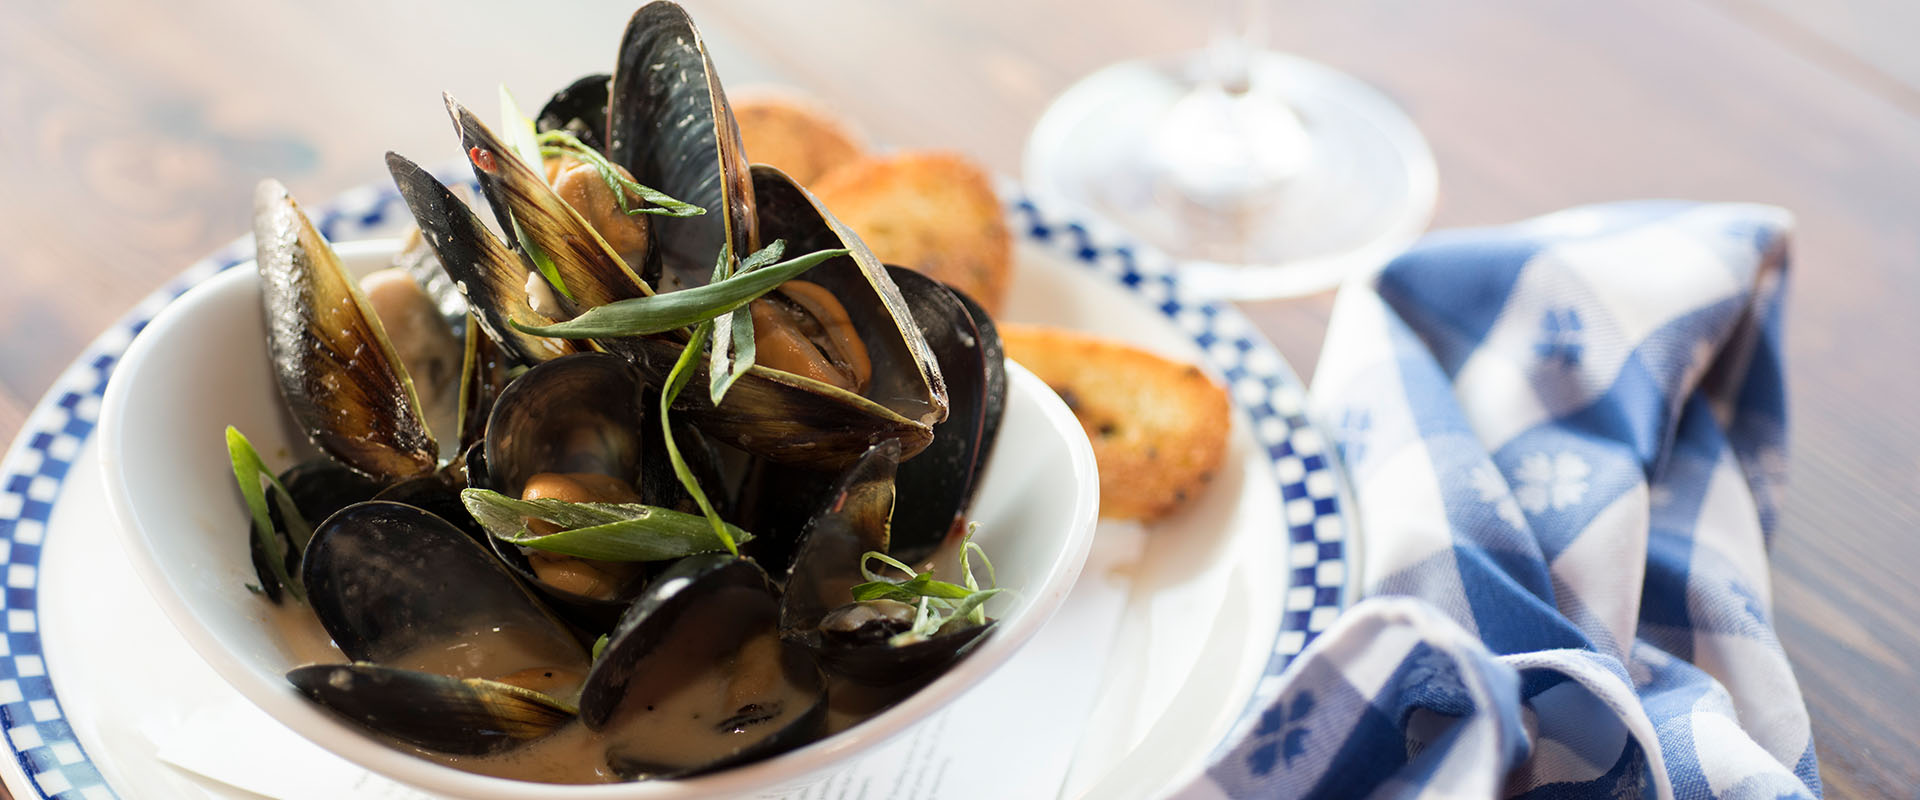 Duke's Seafood Mussels Appetizer